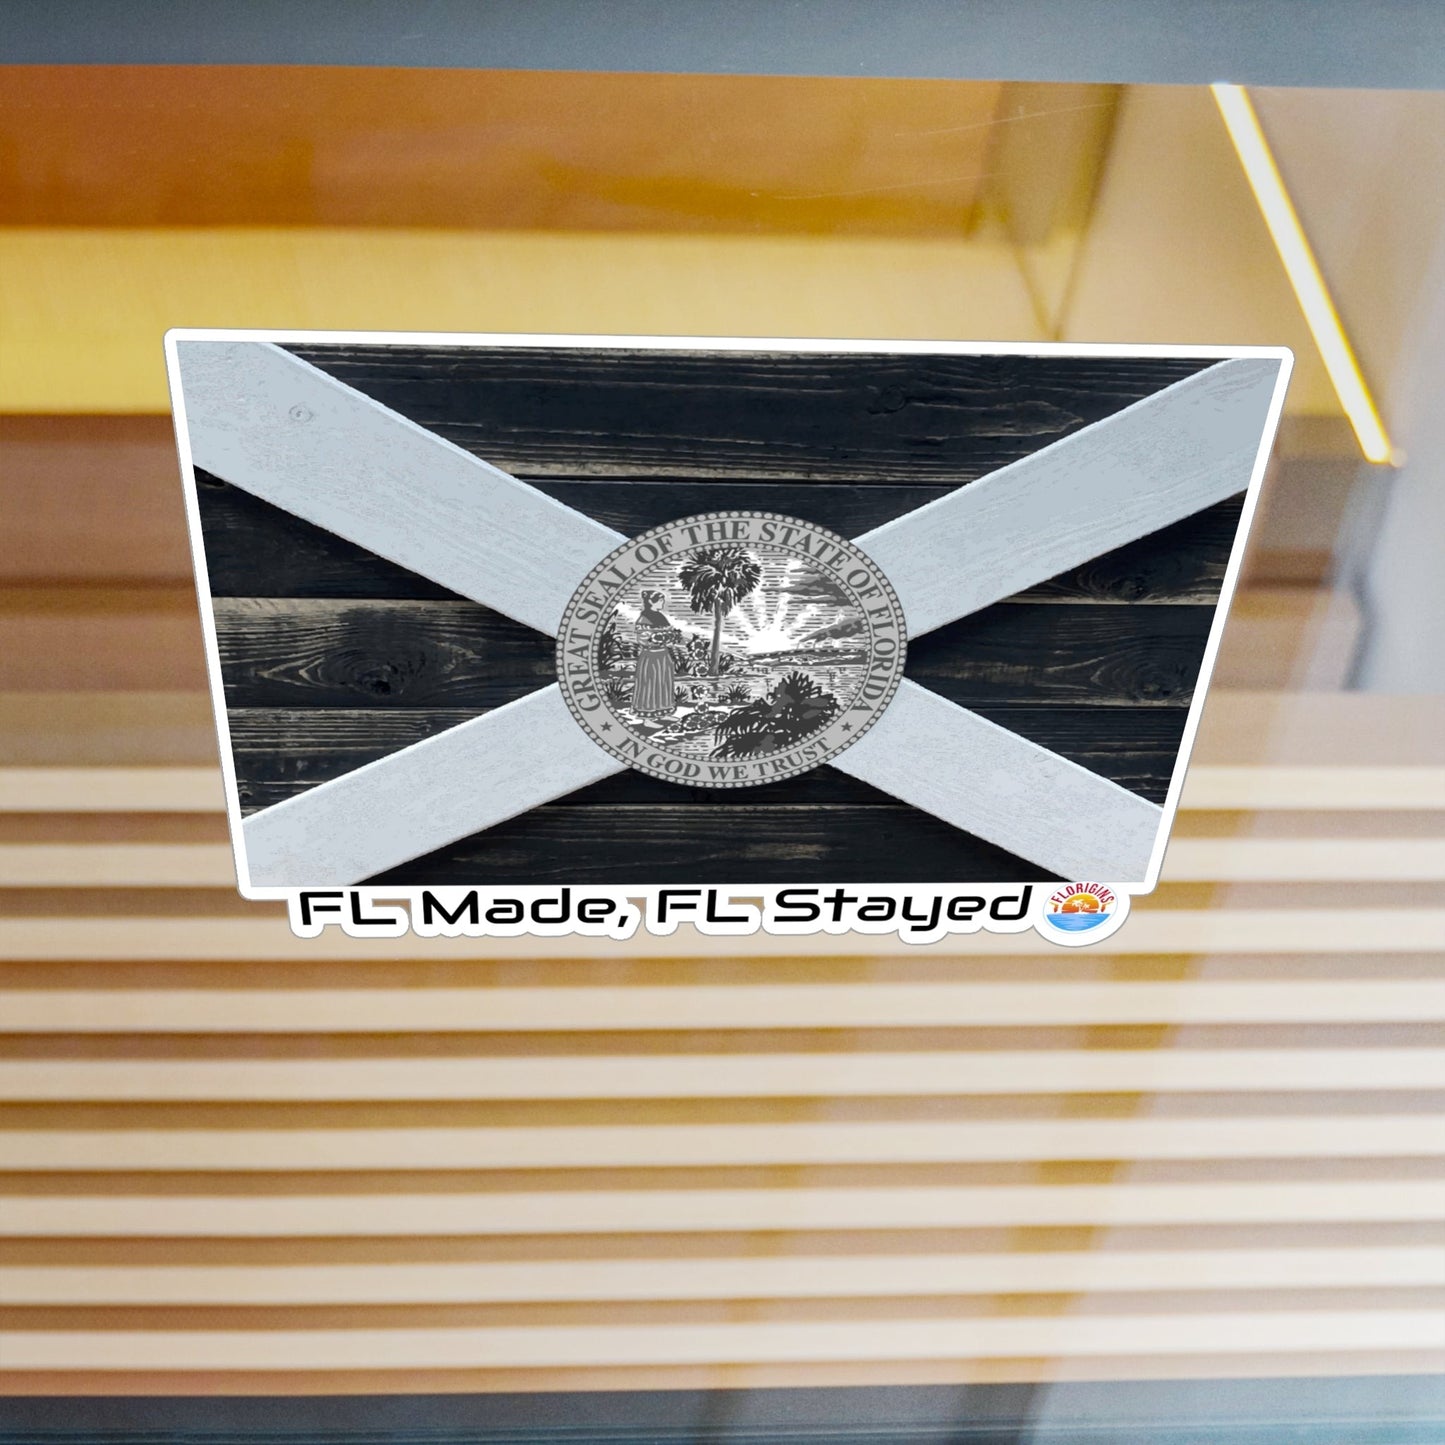 FL Made, FL Stayed Vinyl Decals for Vehicle/Laptop/Cooler/Tumbler